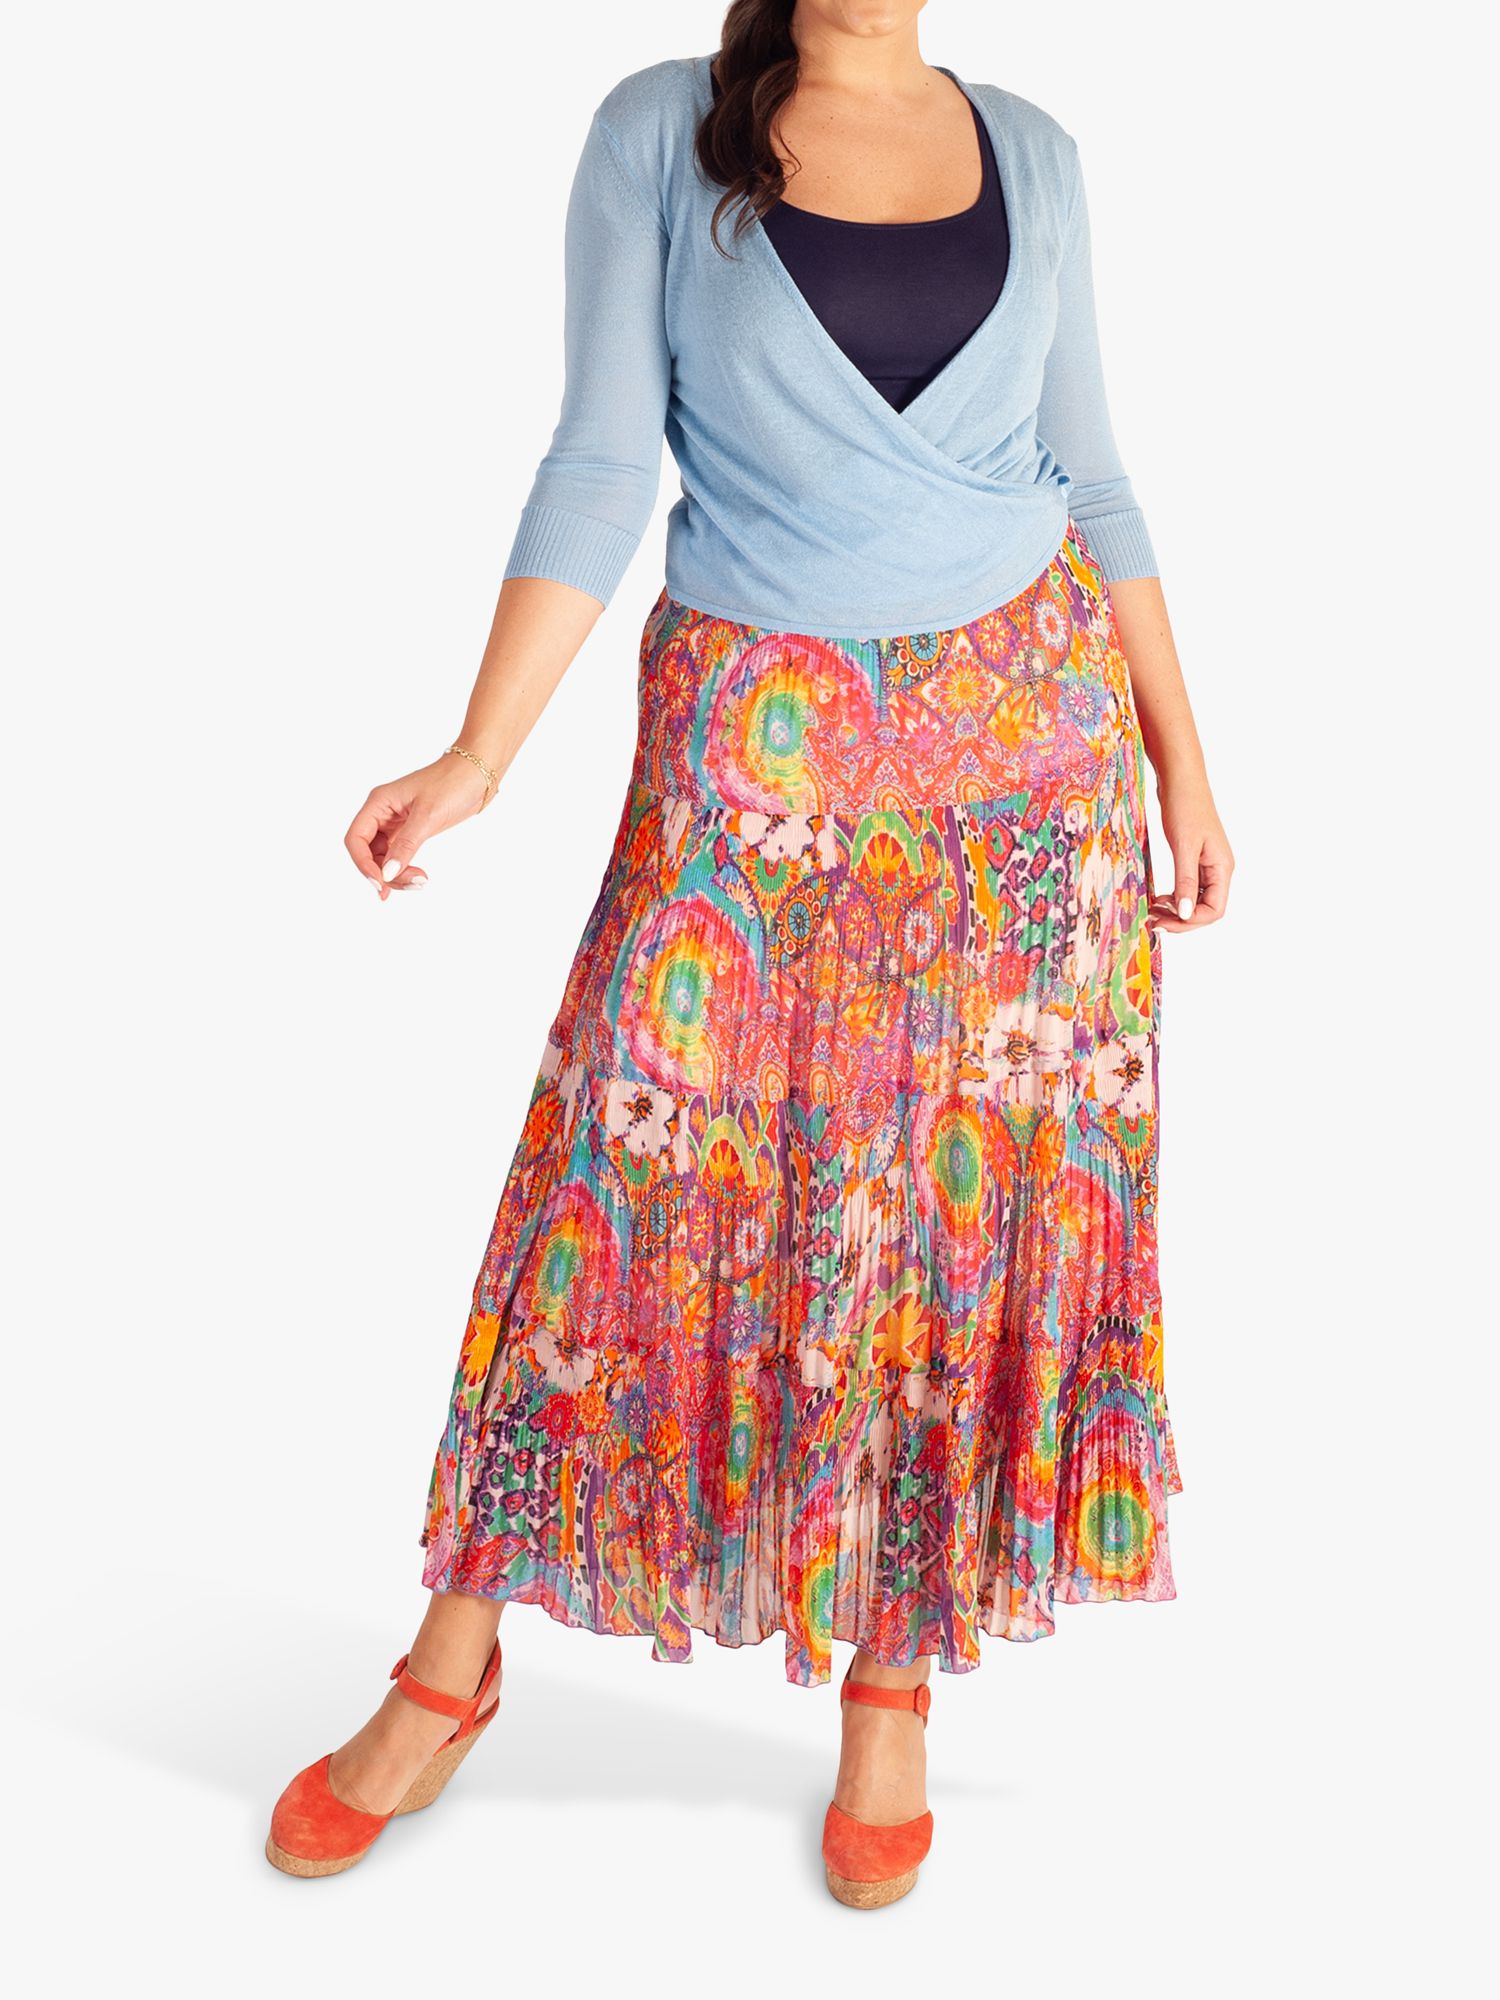 Buy chesca Paisley Pleated Skirt, Tangerine/Multi Online at johnlewis.com